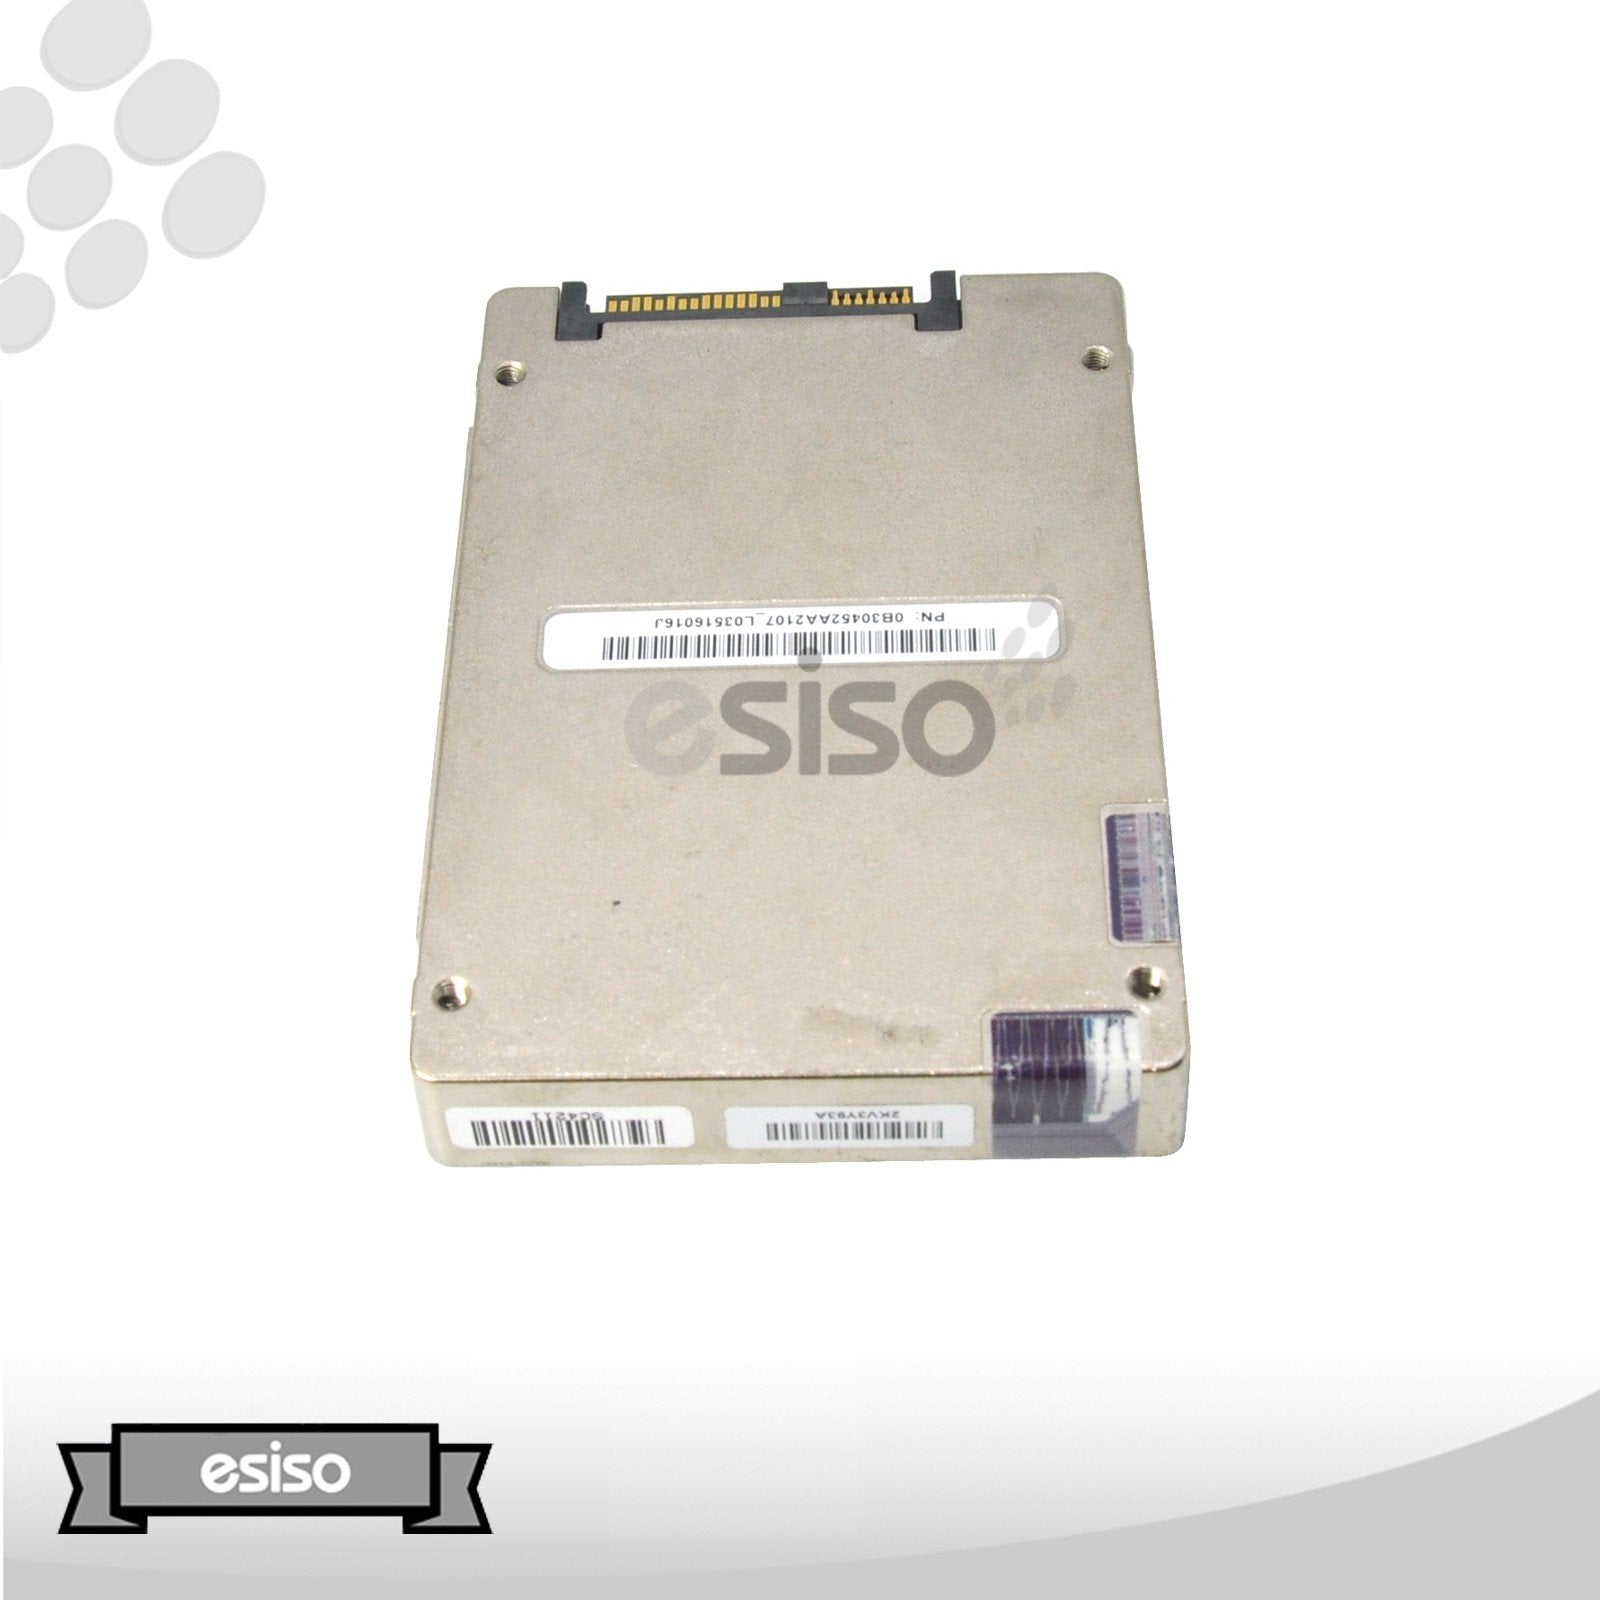 HUSMM8020ASS200 HGST ULTRASTAR 200GB 12G SFF 2.5" SAS SOLID STATE DRIVE